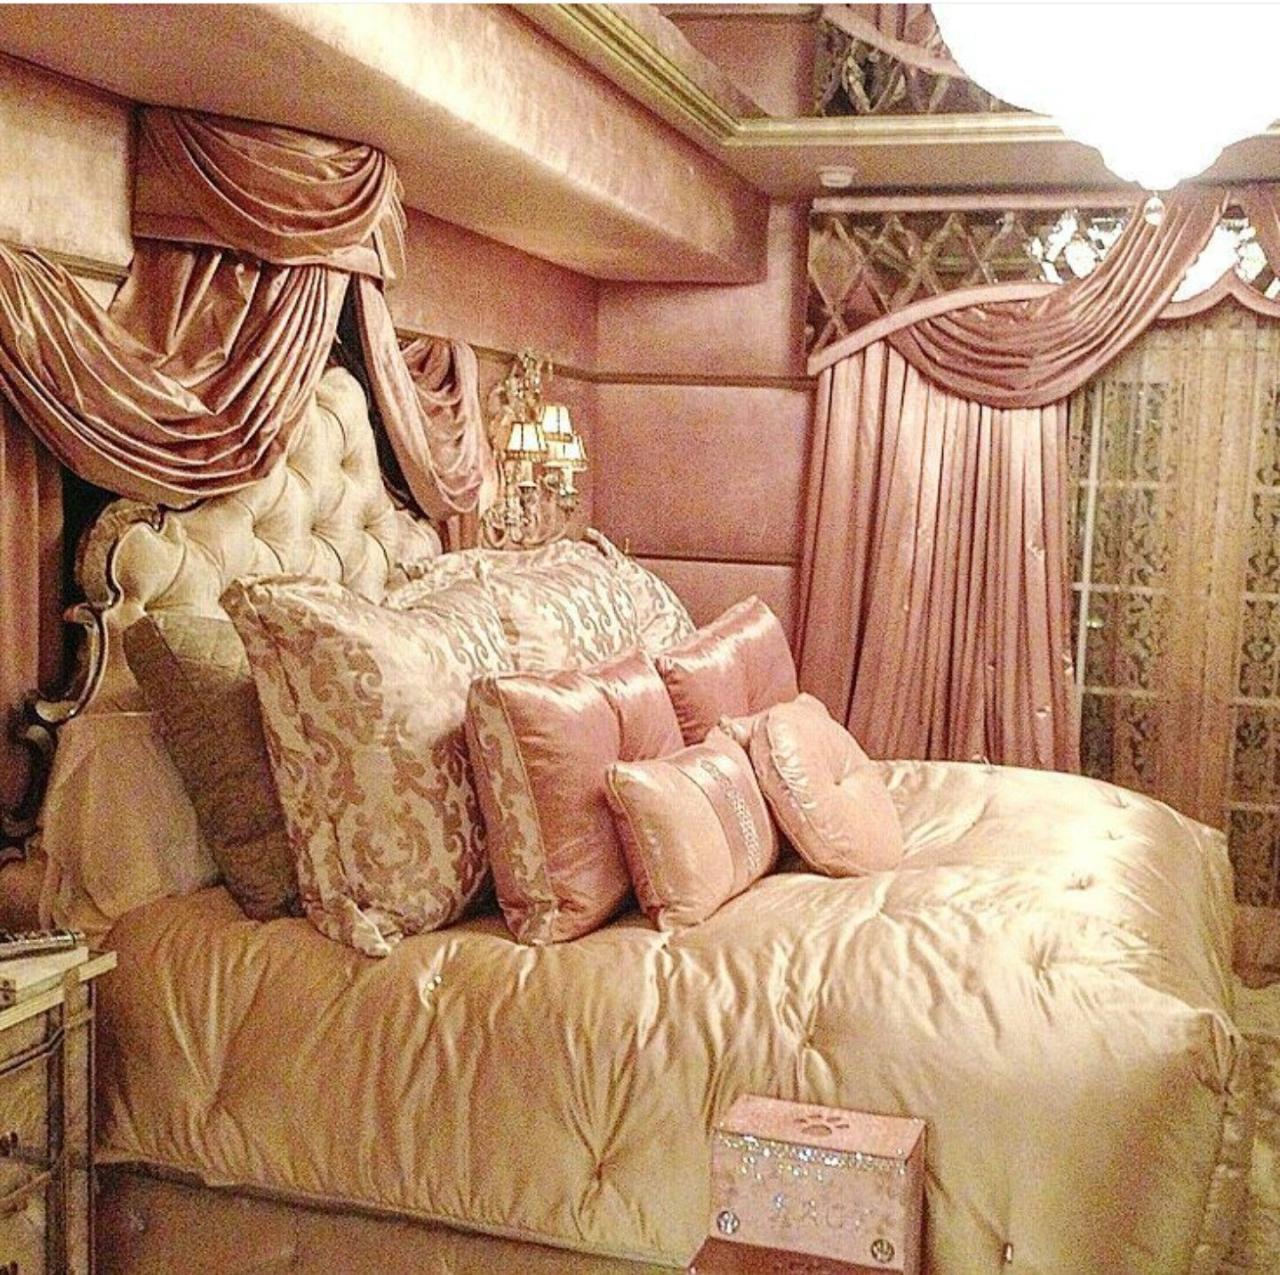 Vintage Glamour: Old Hollywood-Inspired Bedroom Decor